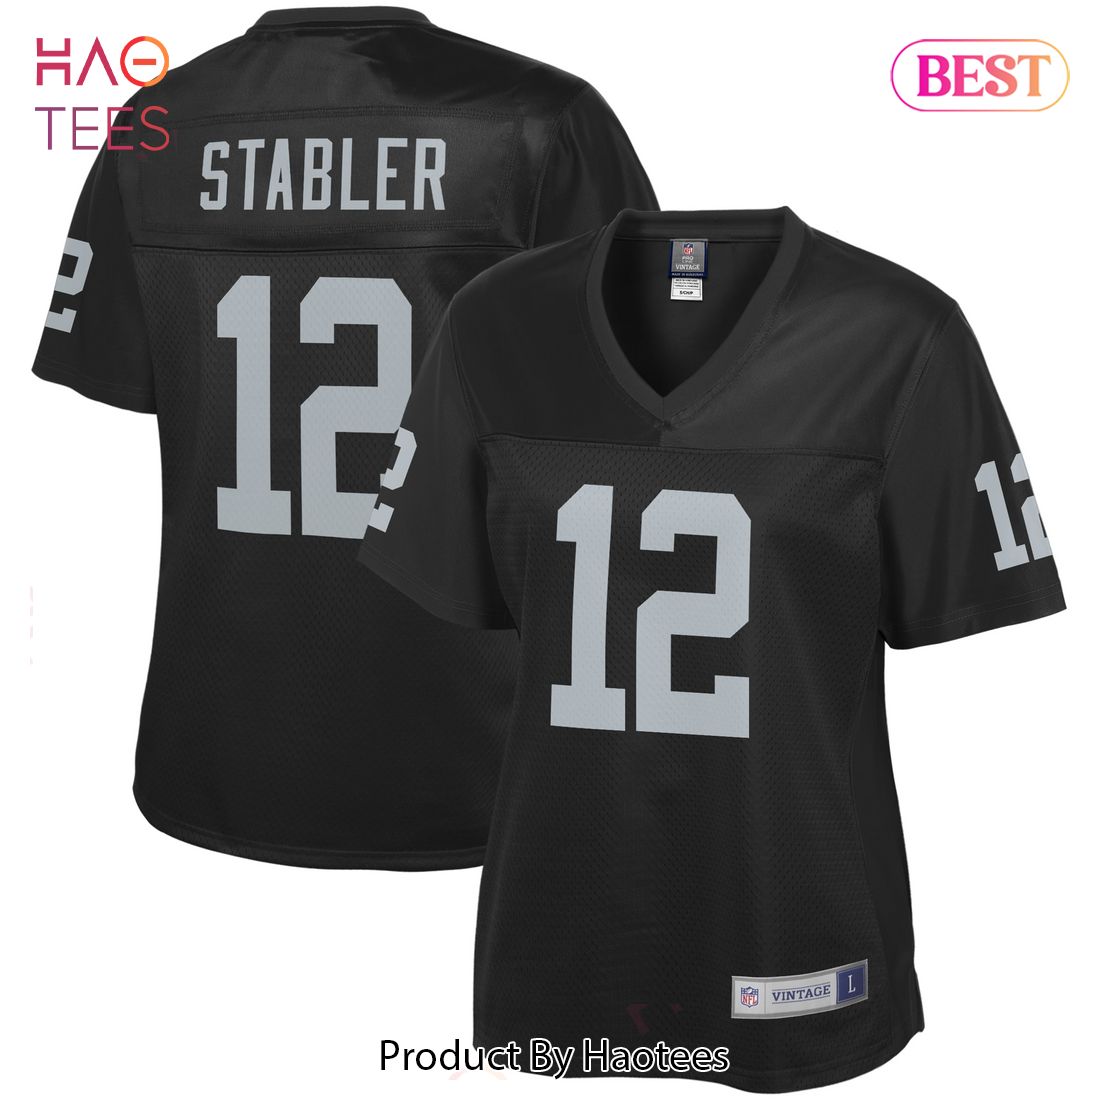 Ken Stabler Las Vegas Raiders NFL Pro Line Women’s Retired Player Jersey Black